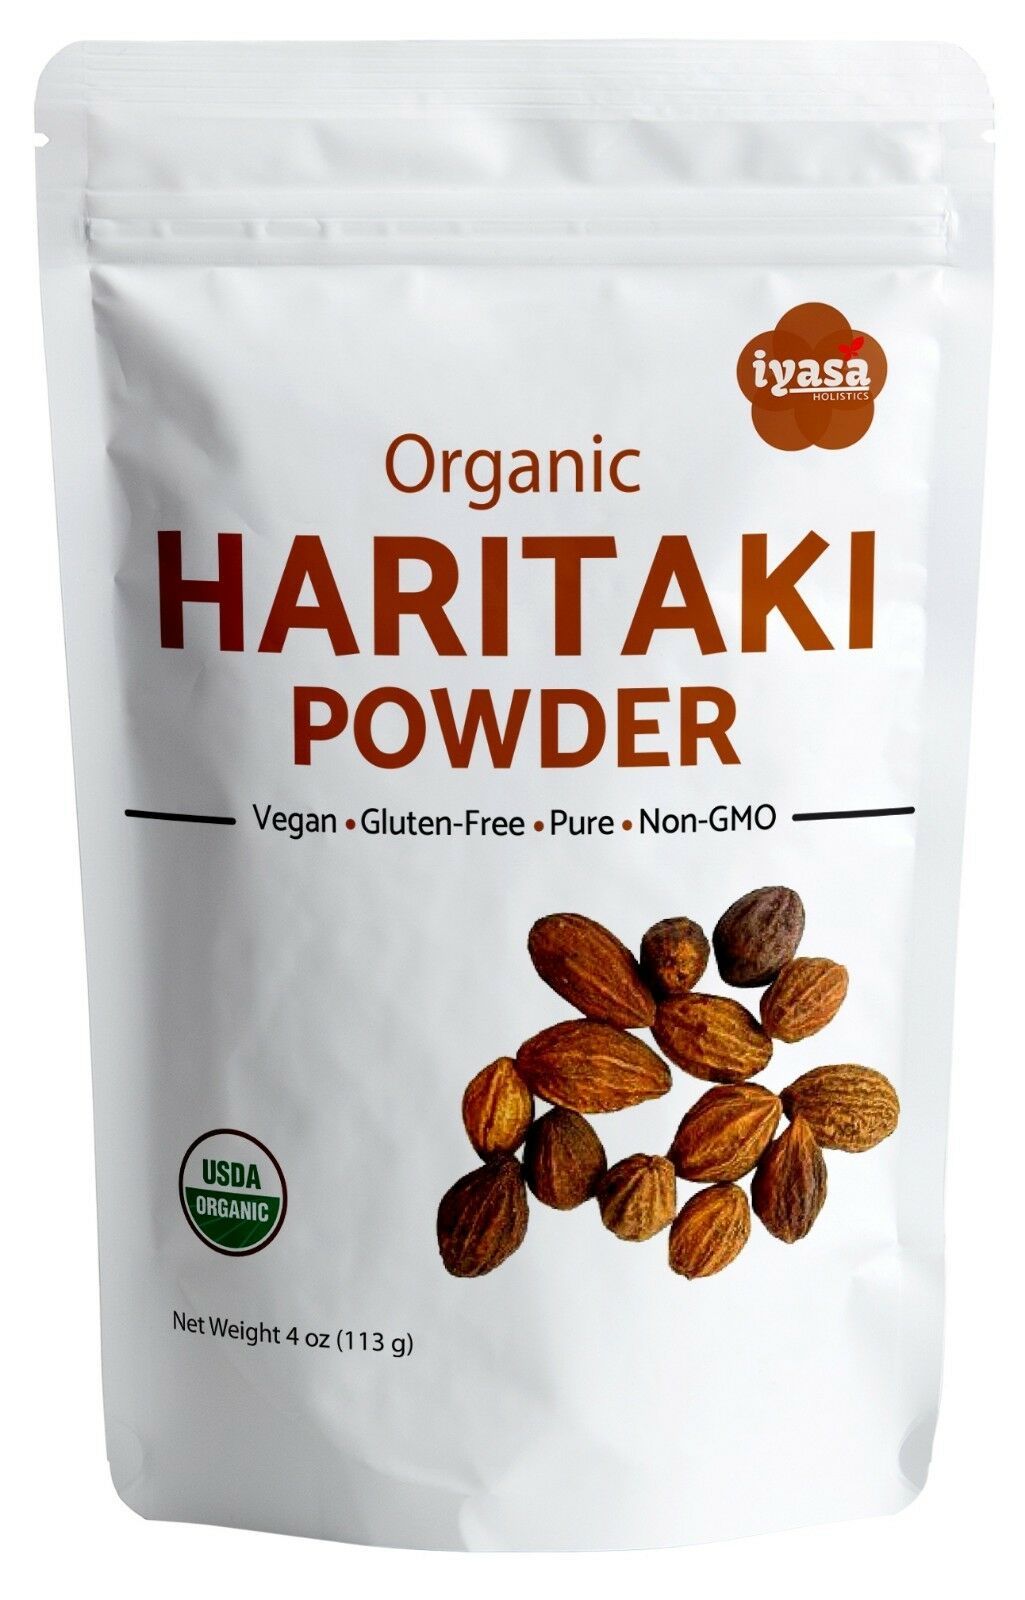 Organic Haritaki Powder | Harde | Harad | Supports Digestion 4,8,16 oz 1 pound